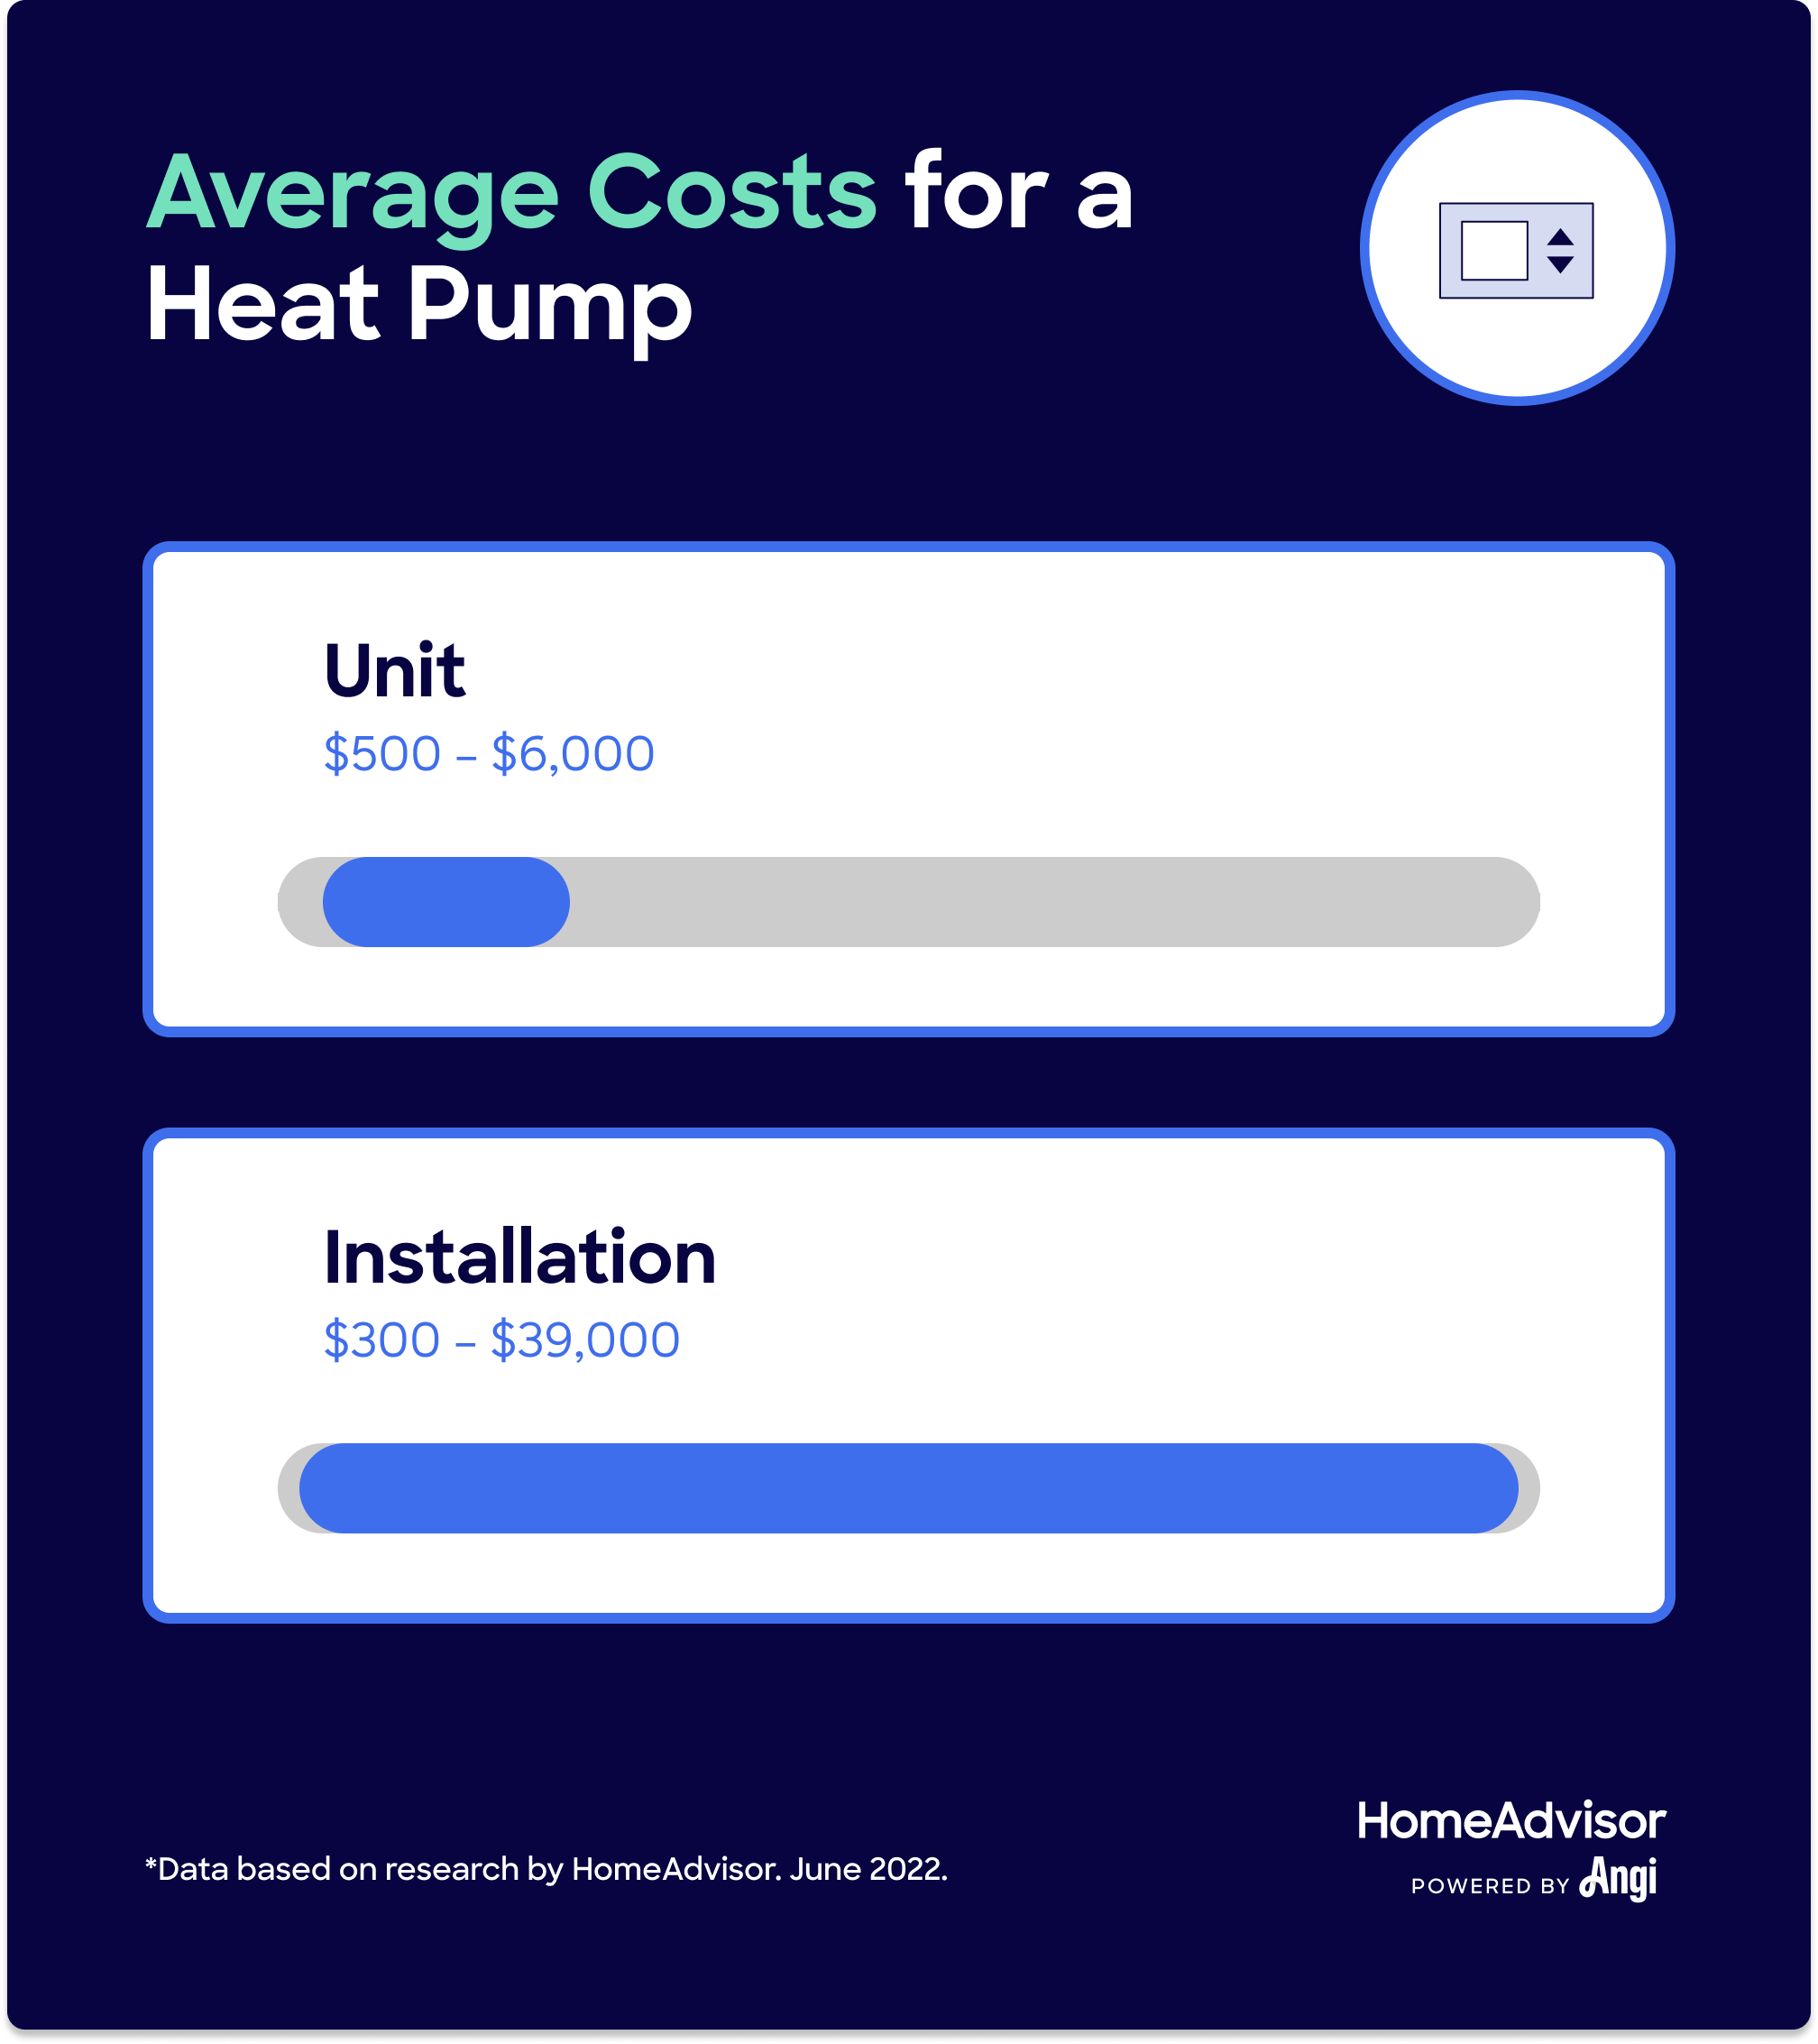 Air Source Heat Pump - Local Expert Installers